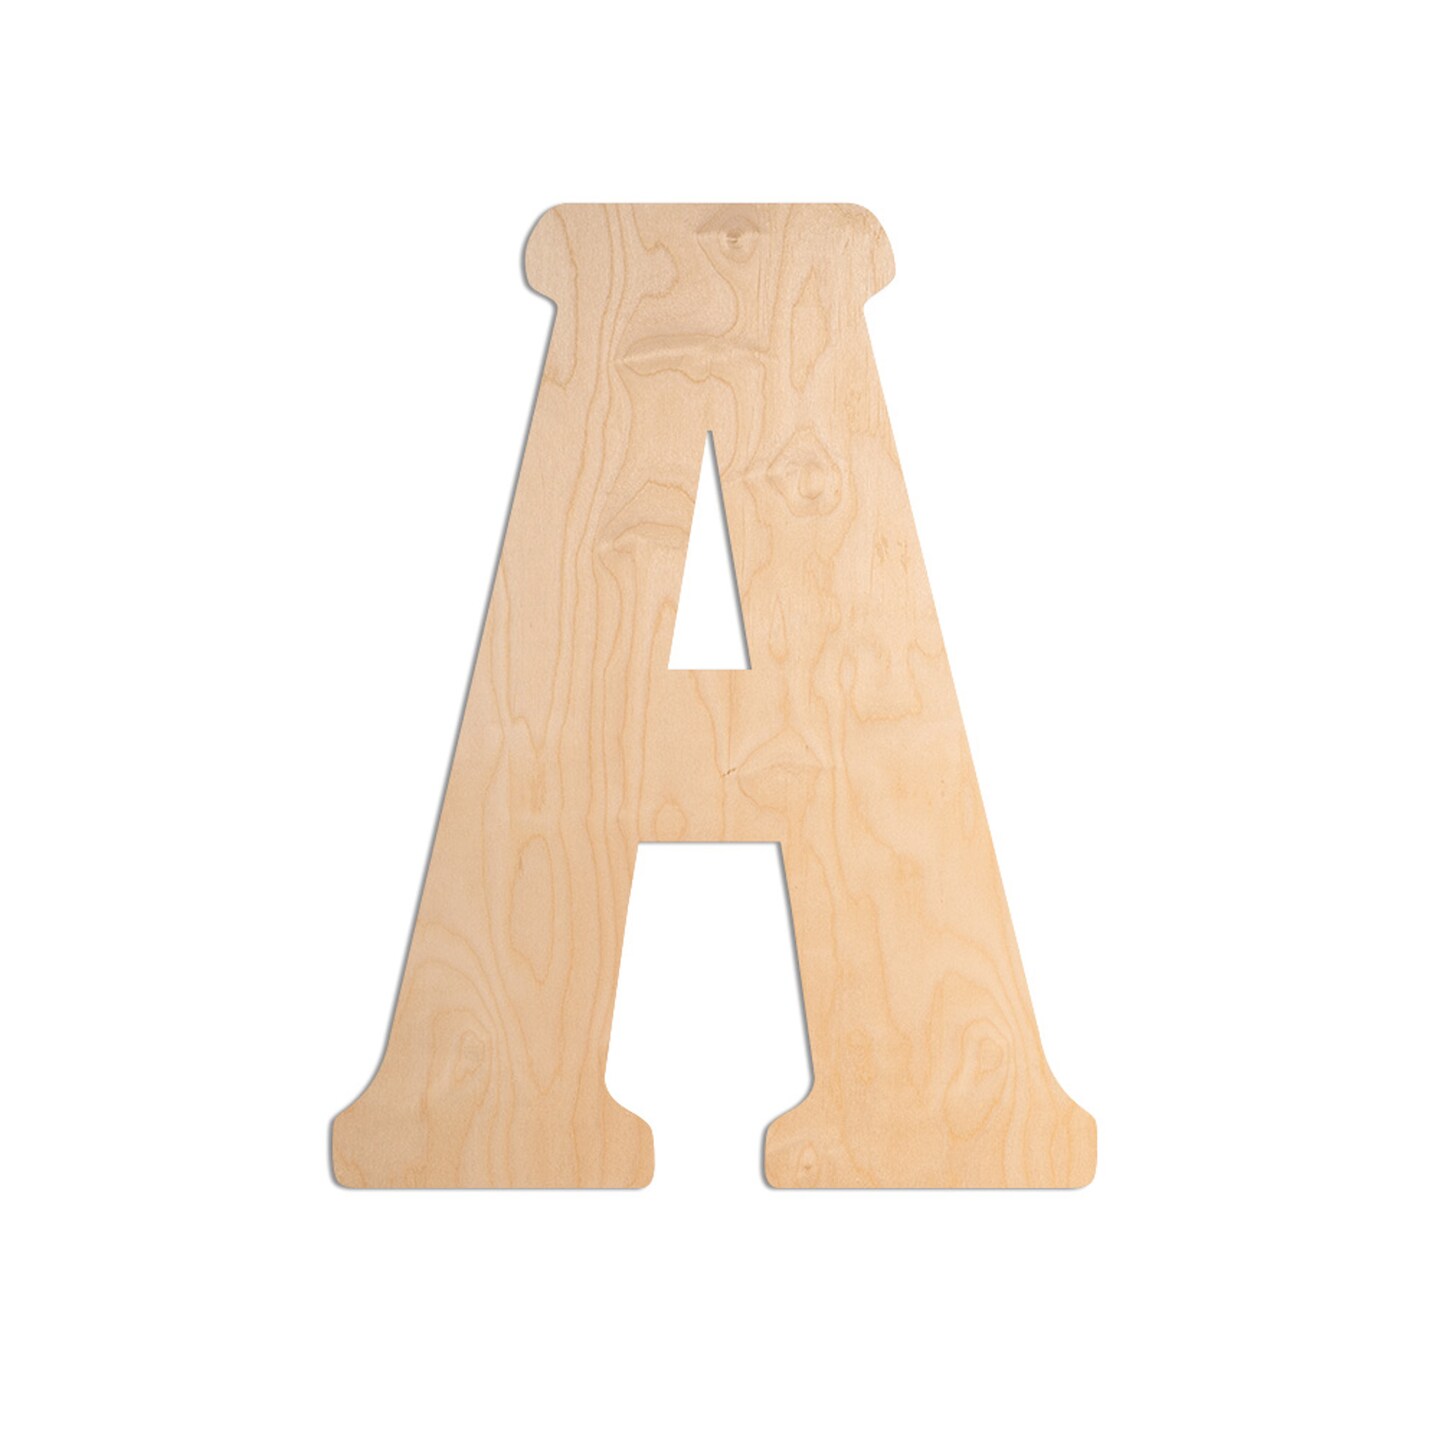 23 In. Letter A, Unfinished Vintage Wood Letter (A)